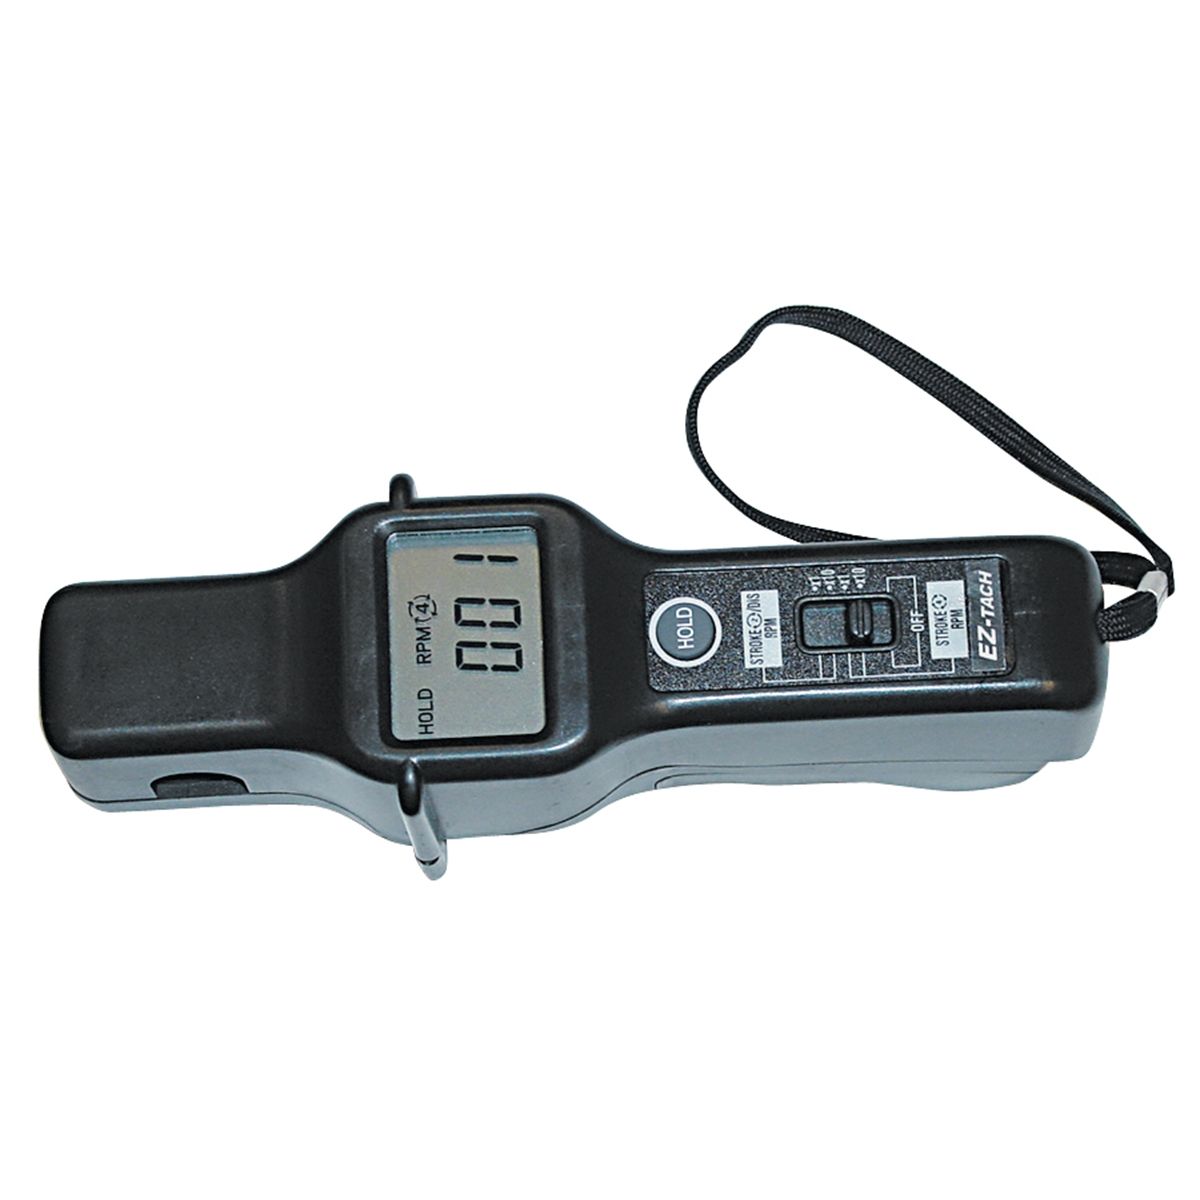 EZ-Tach Wireless Digital Tachometer